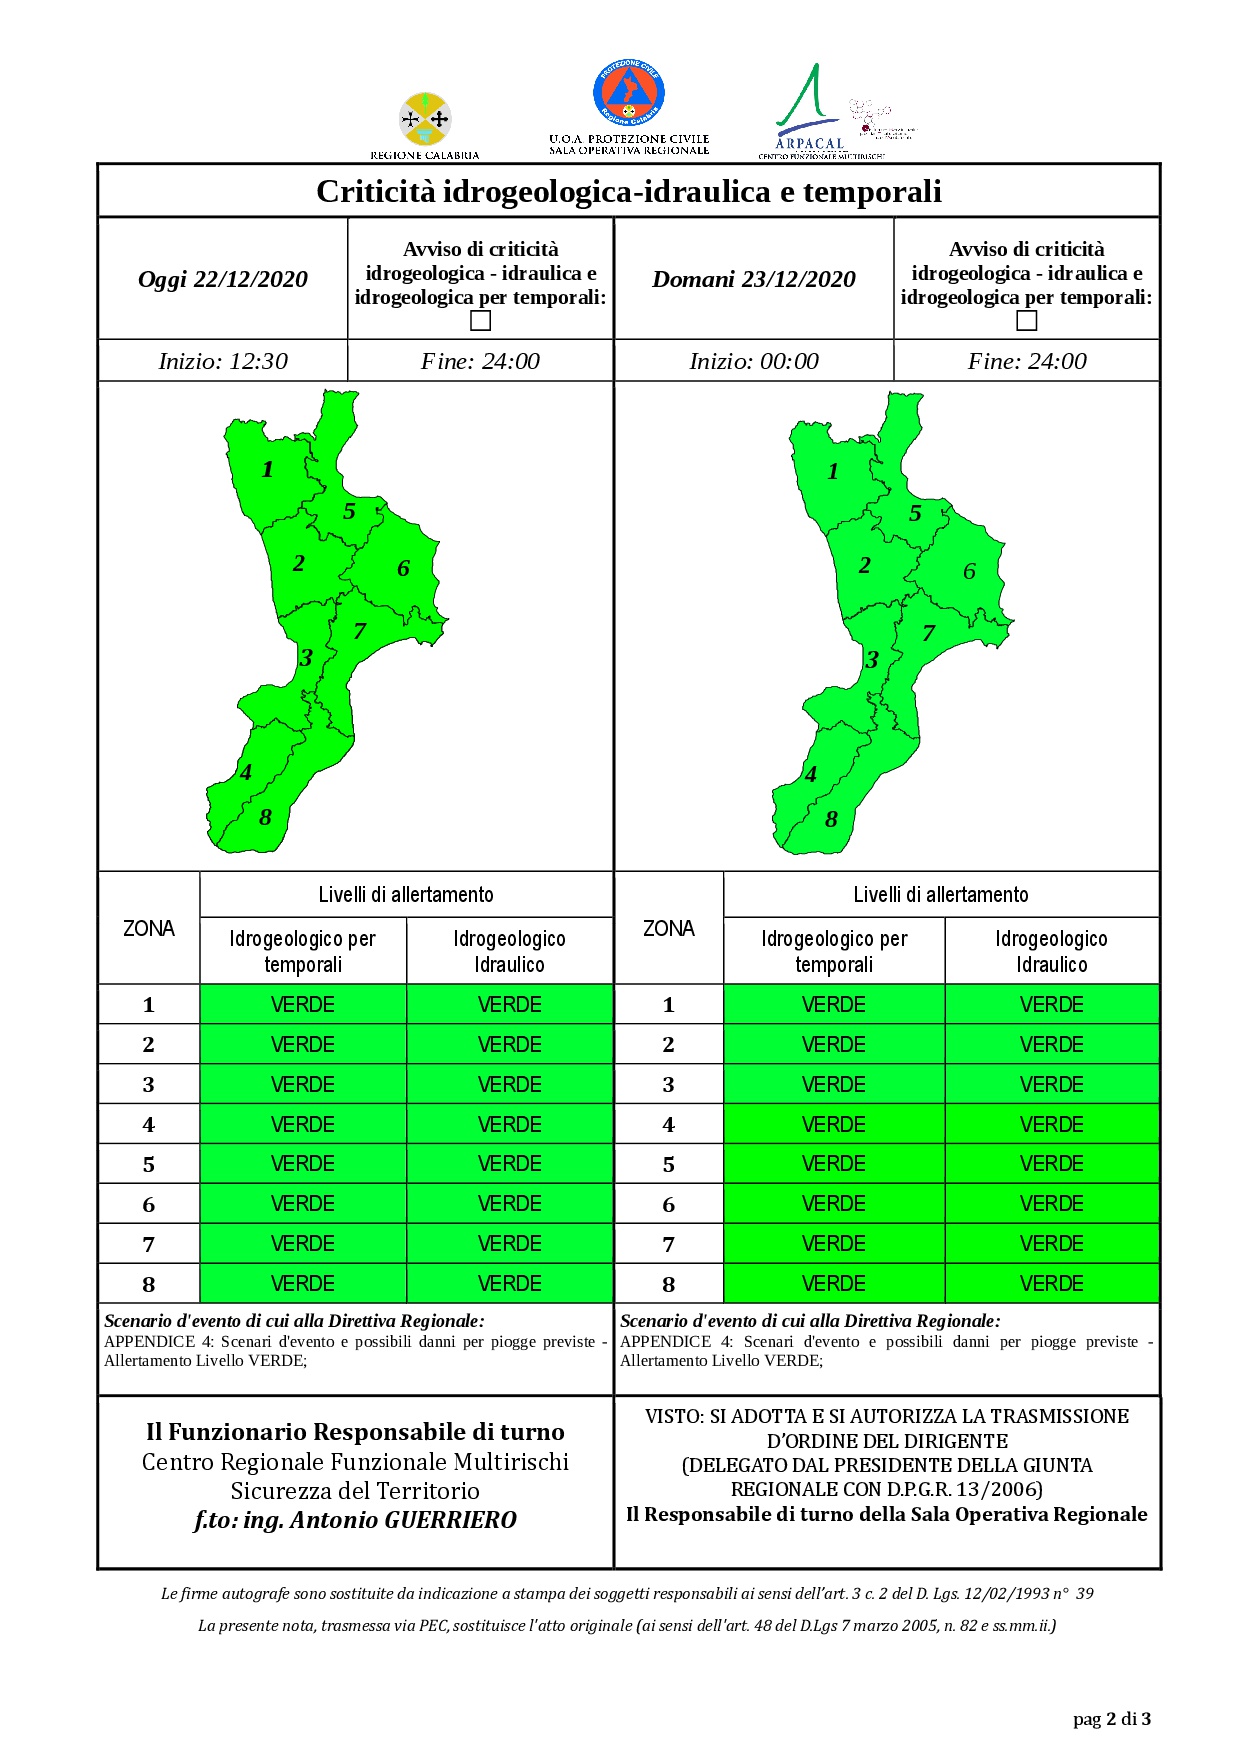 Criticità idrogeologica-idraulica e temporali in Calabria 22-12-2020